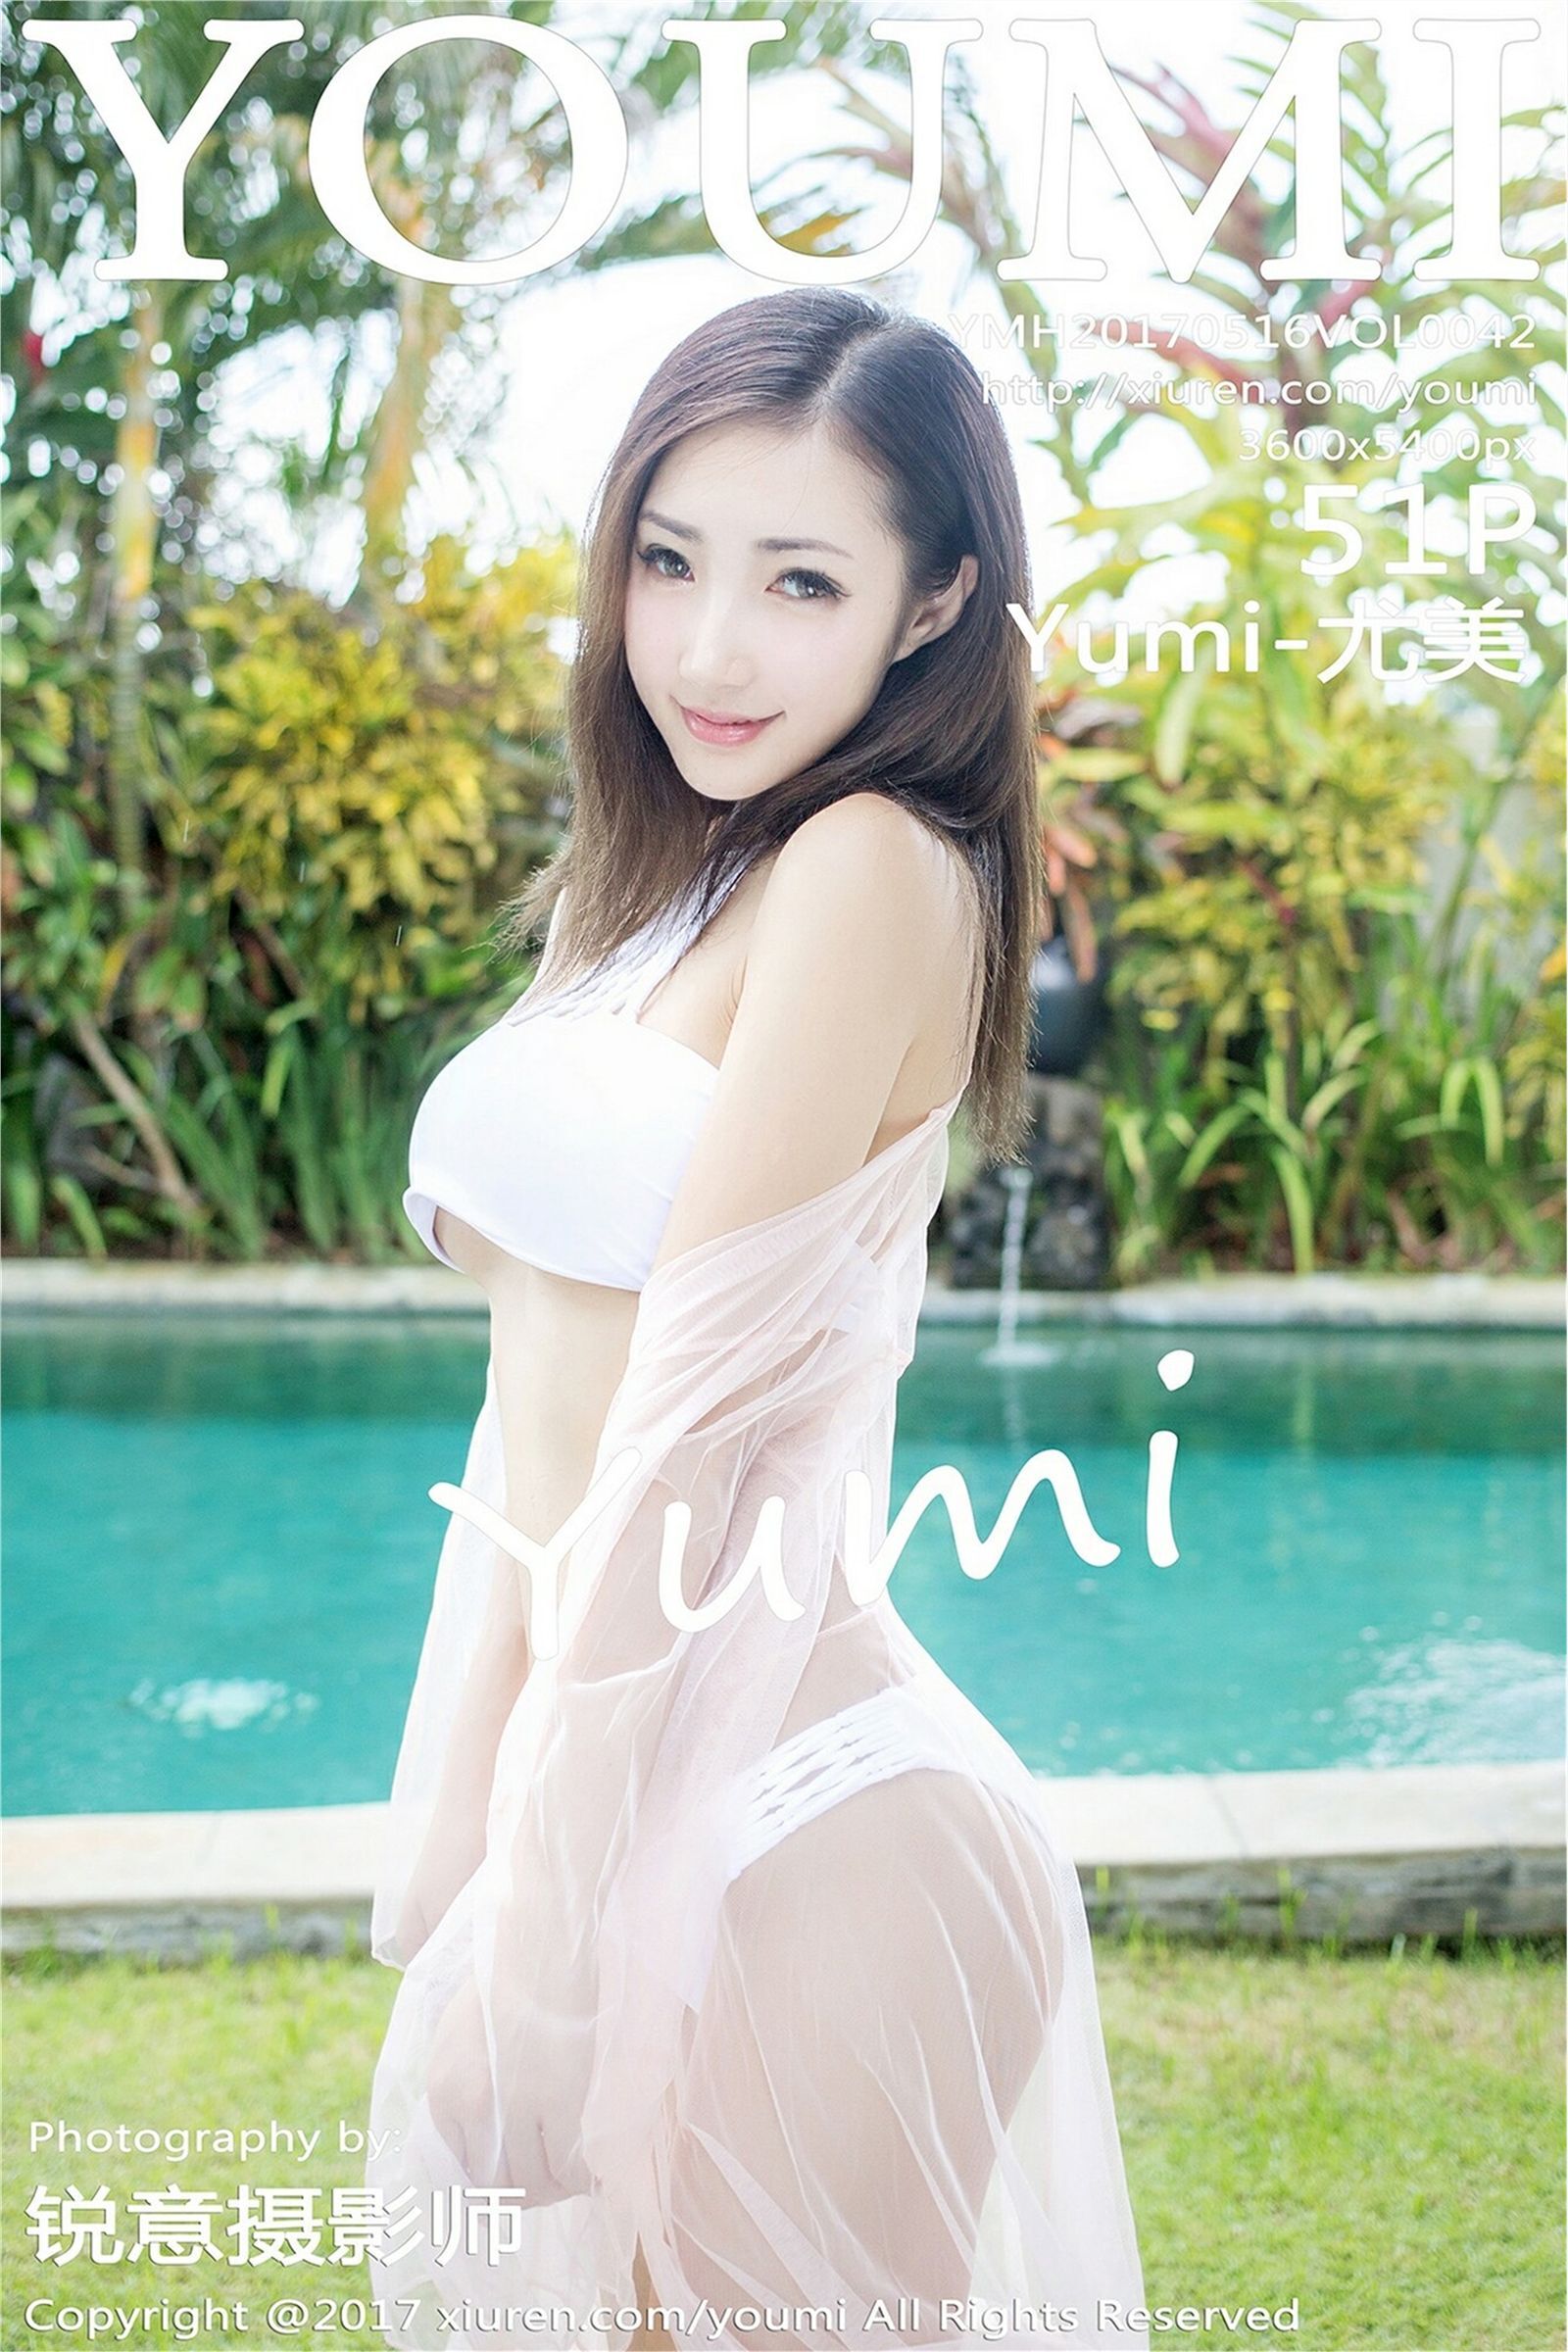 [youmi youmi] April 16, 2017 Vol.042 Yumi Youmei